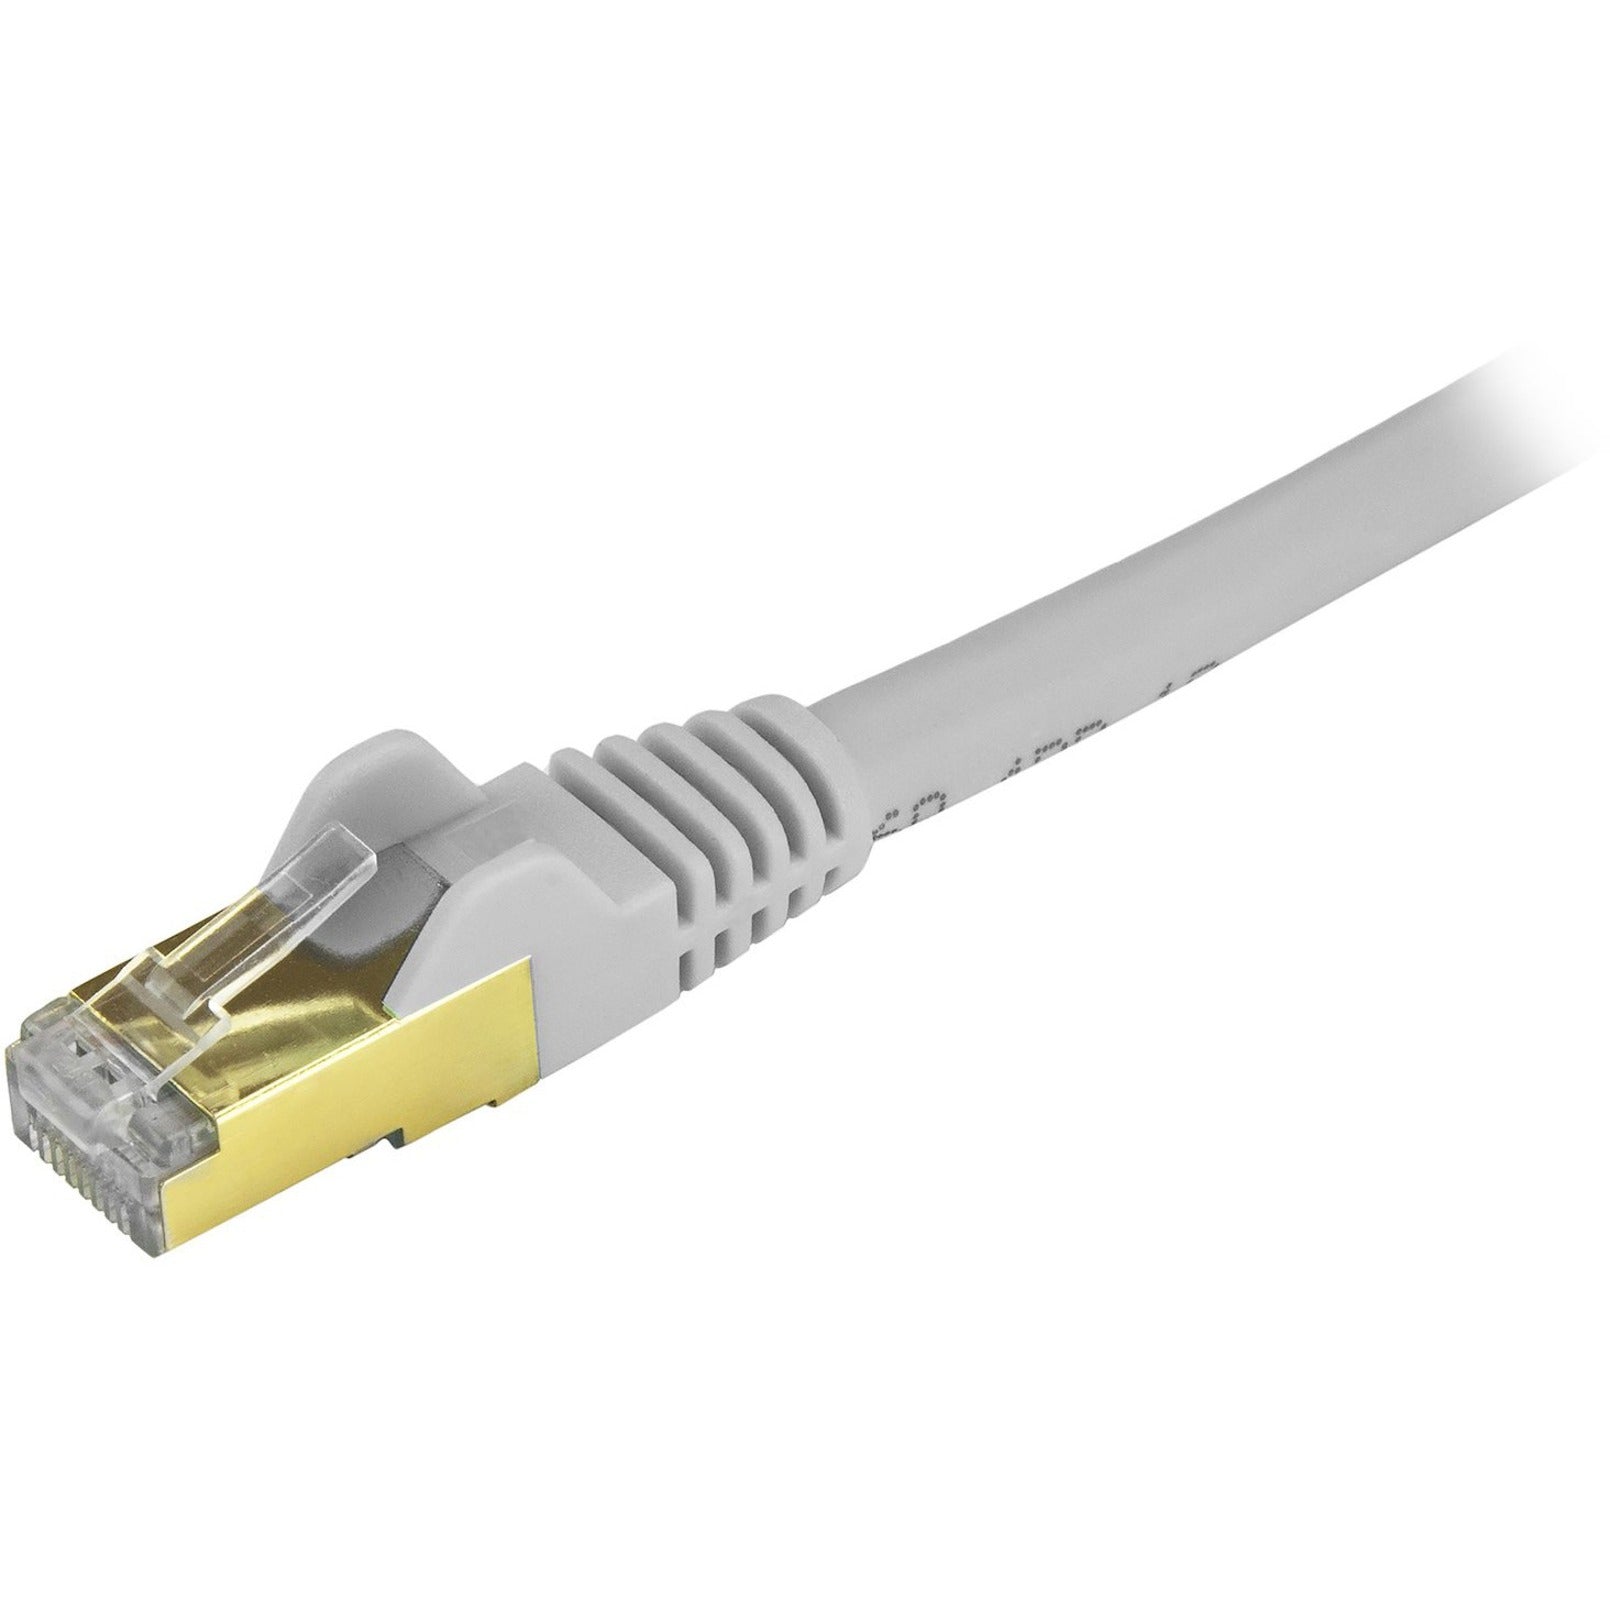 StarTech.com C6ASPAT9GR Cat6a Ethernet Patch Cable - Shielded (STP) - 9 ft., Gray, Snagless RJ45 Ethernet Cord